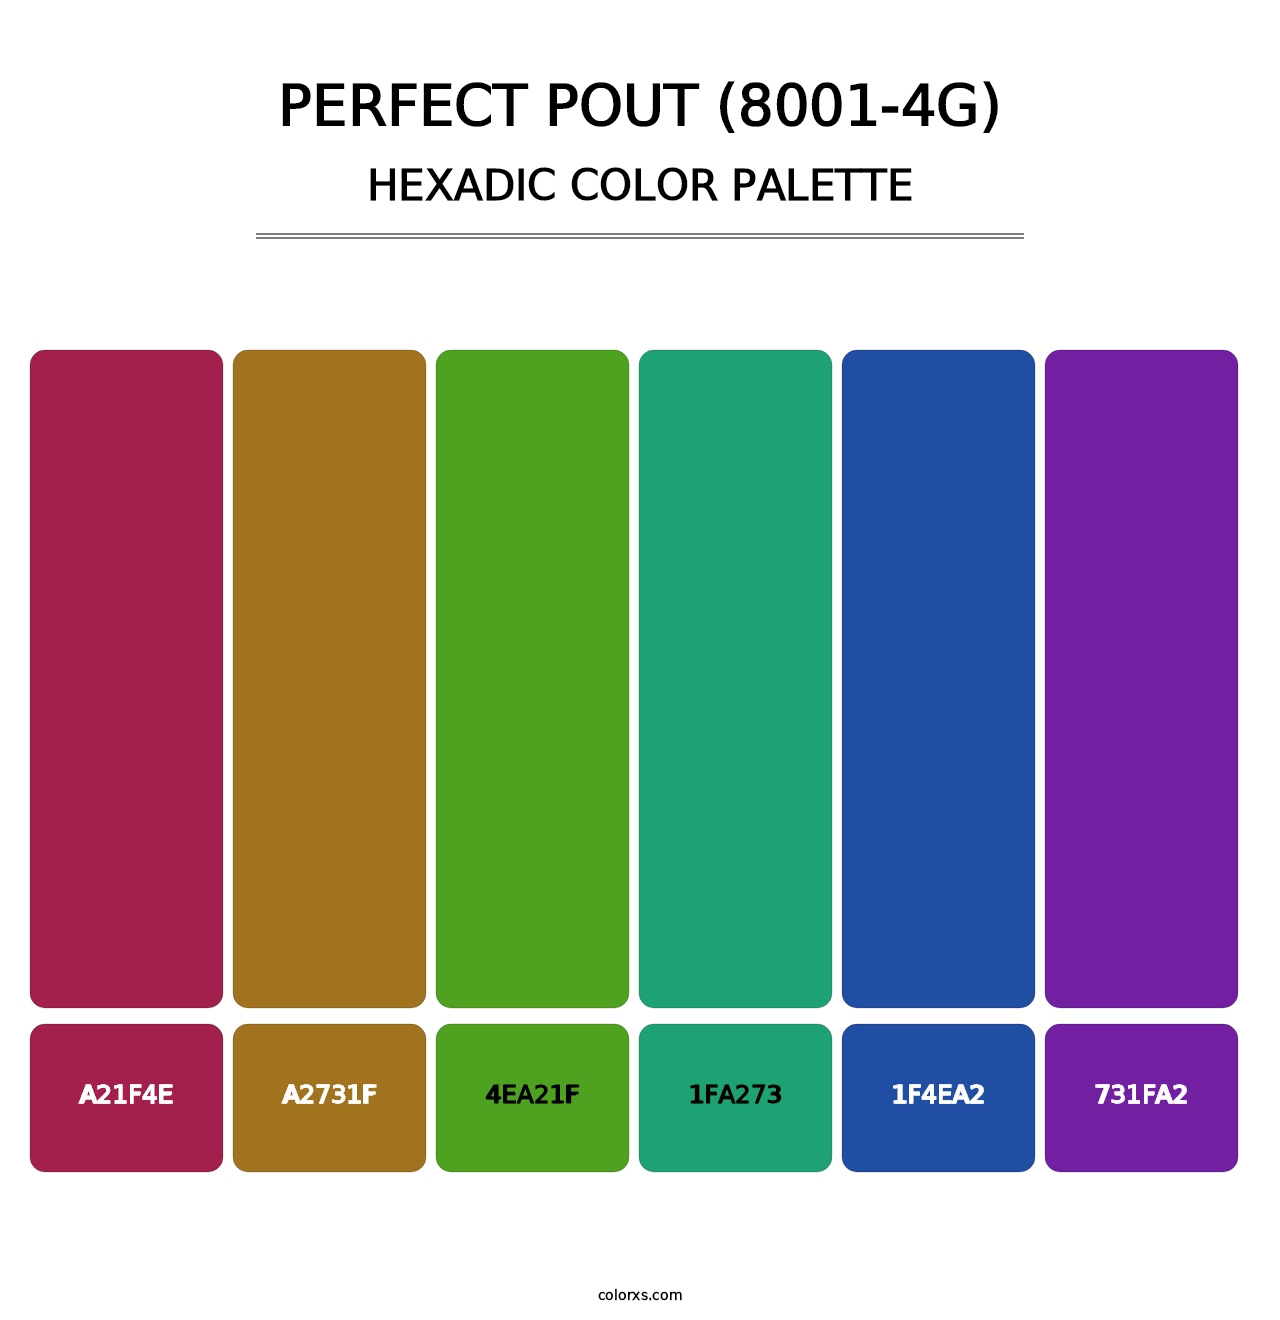 Perfect Pout (8001-4G) - Hexadic Color Palette